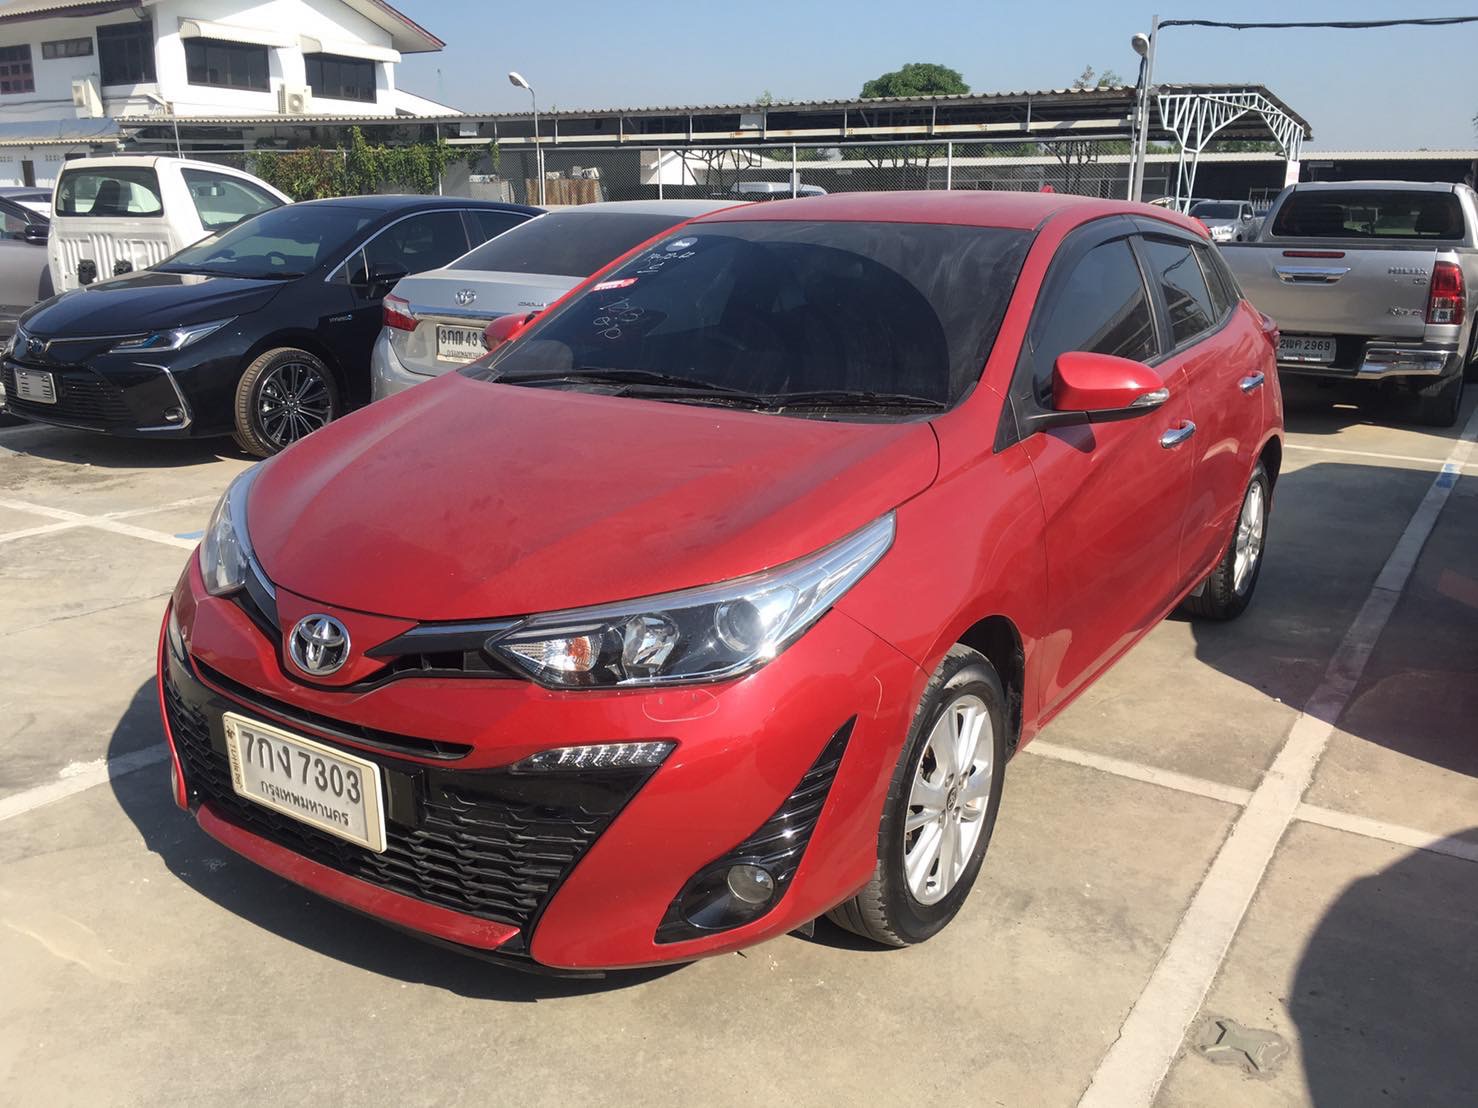 Toyota Yaris ปี 2017 สีแดง